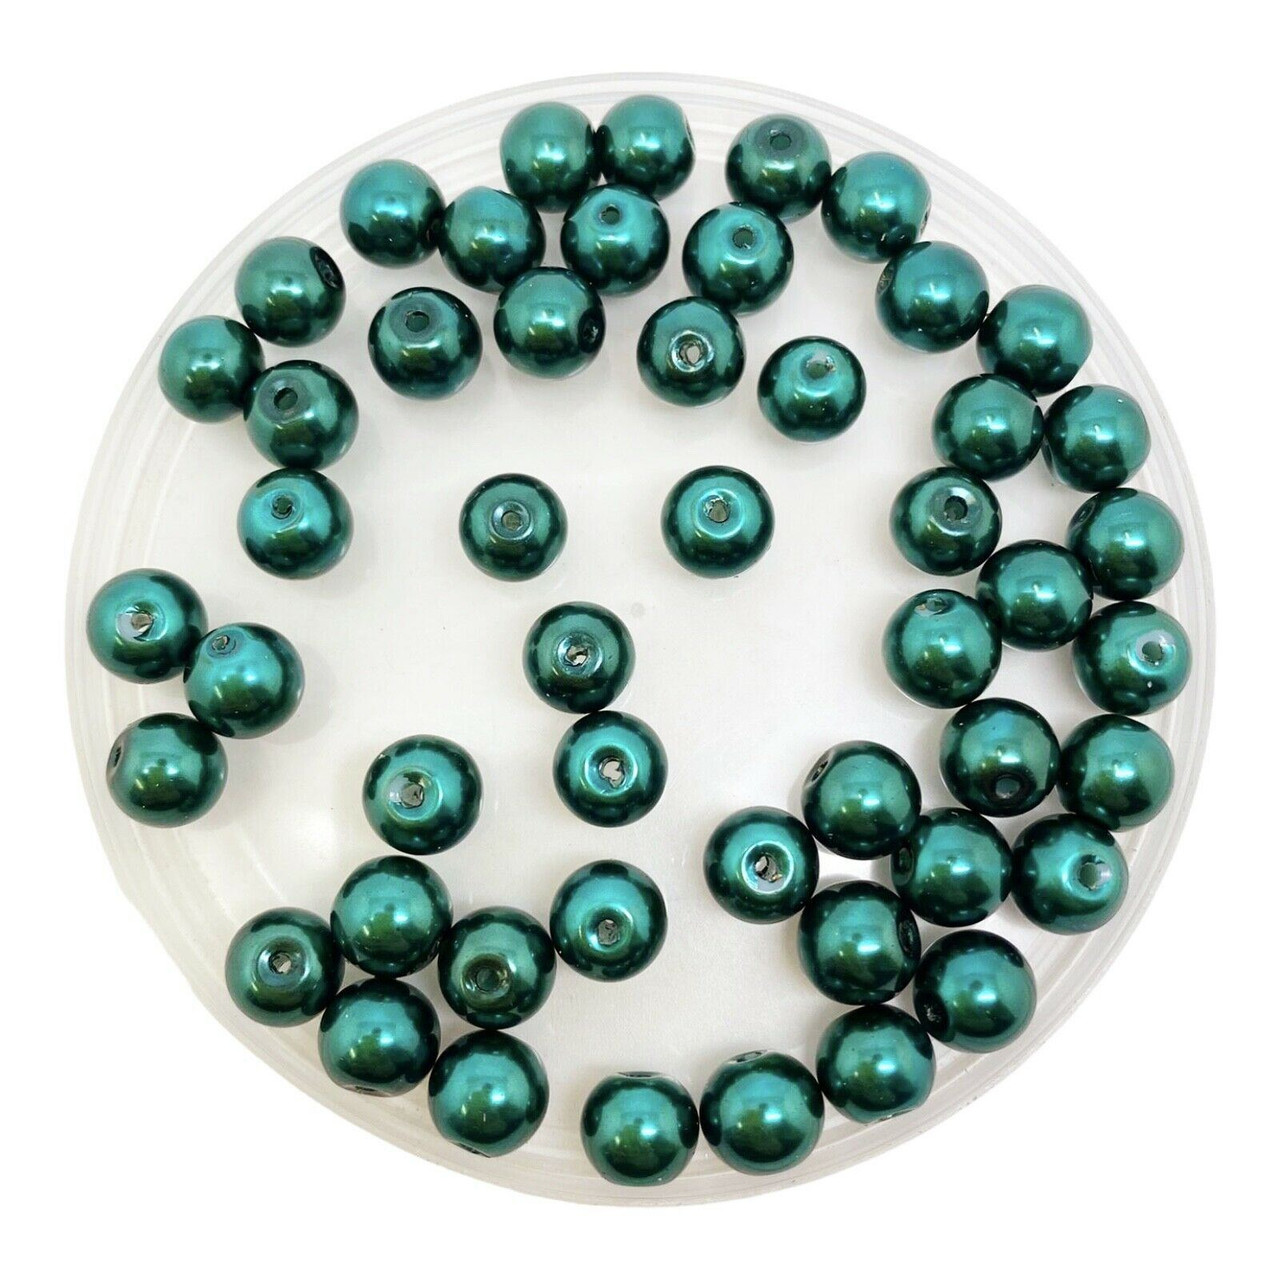 Evergreen 8mm Glass Pearls